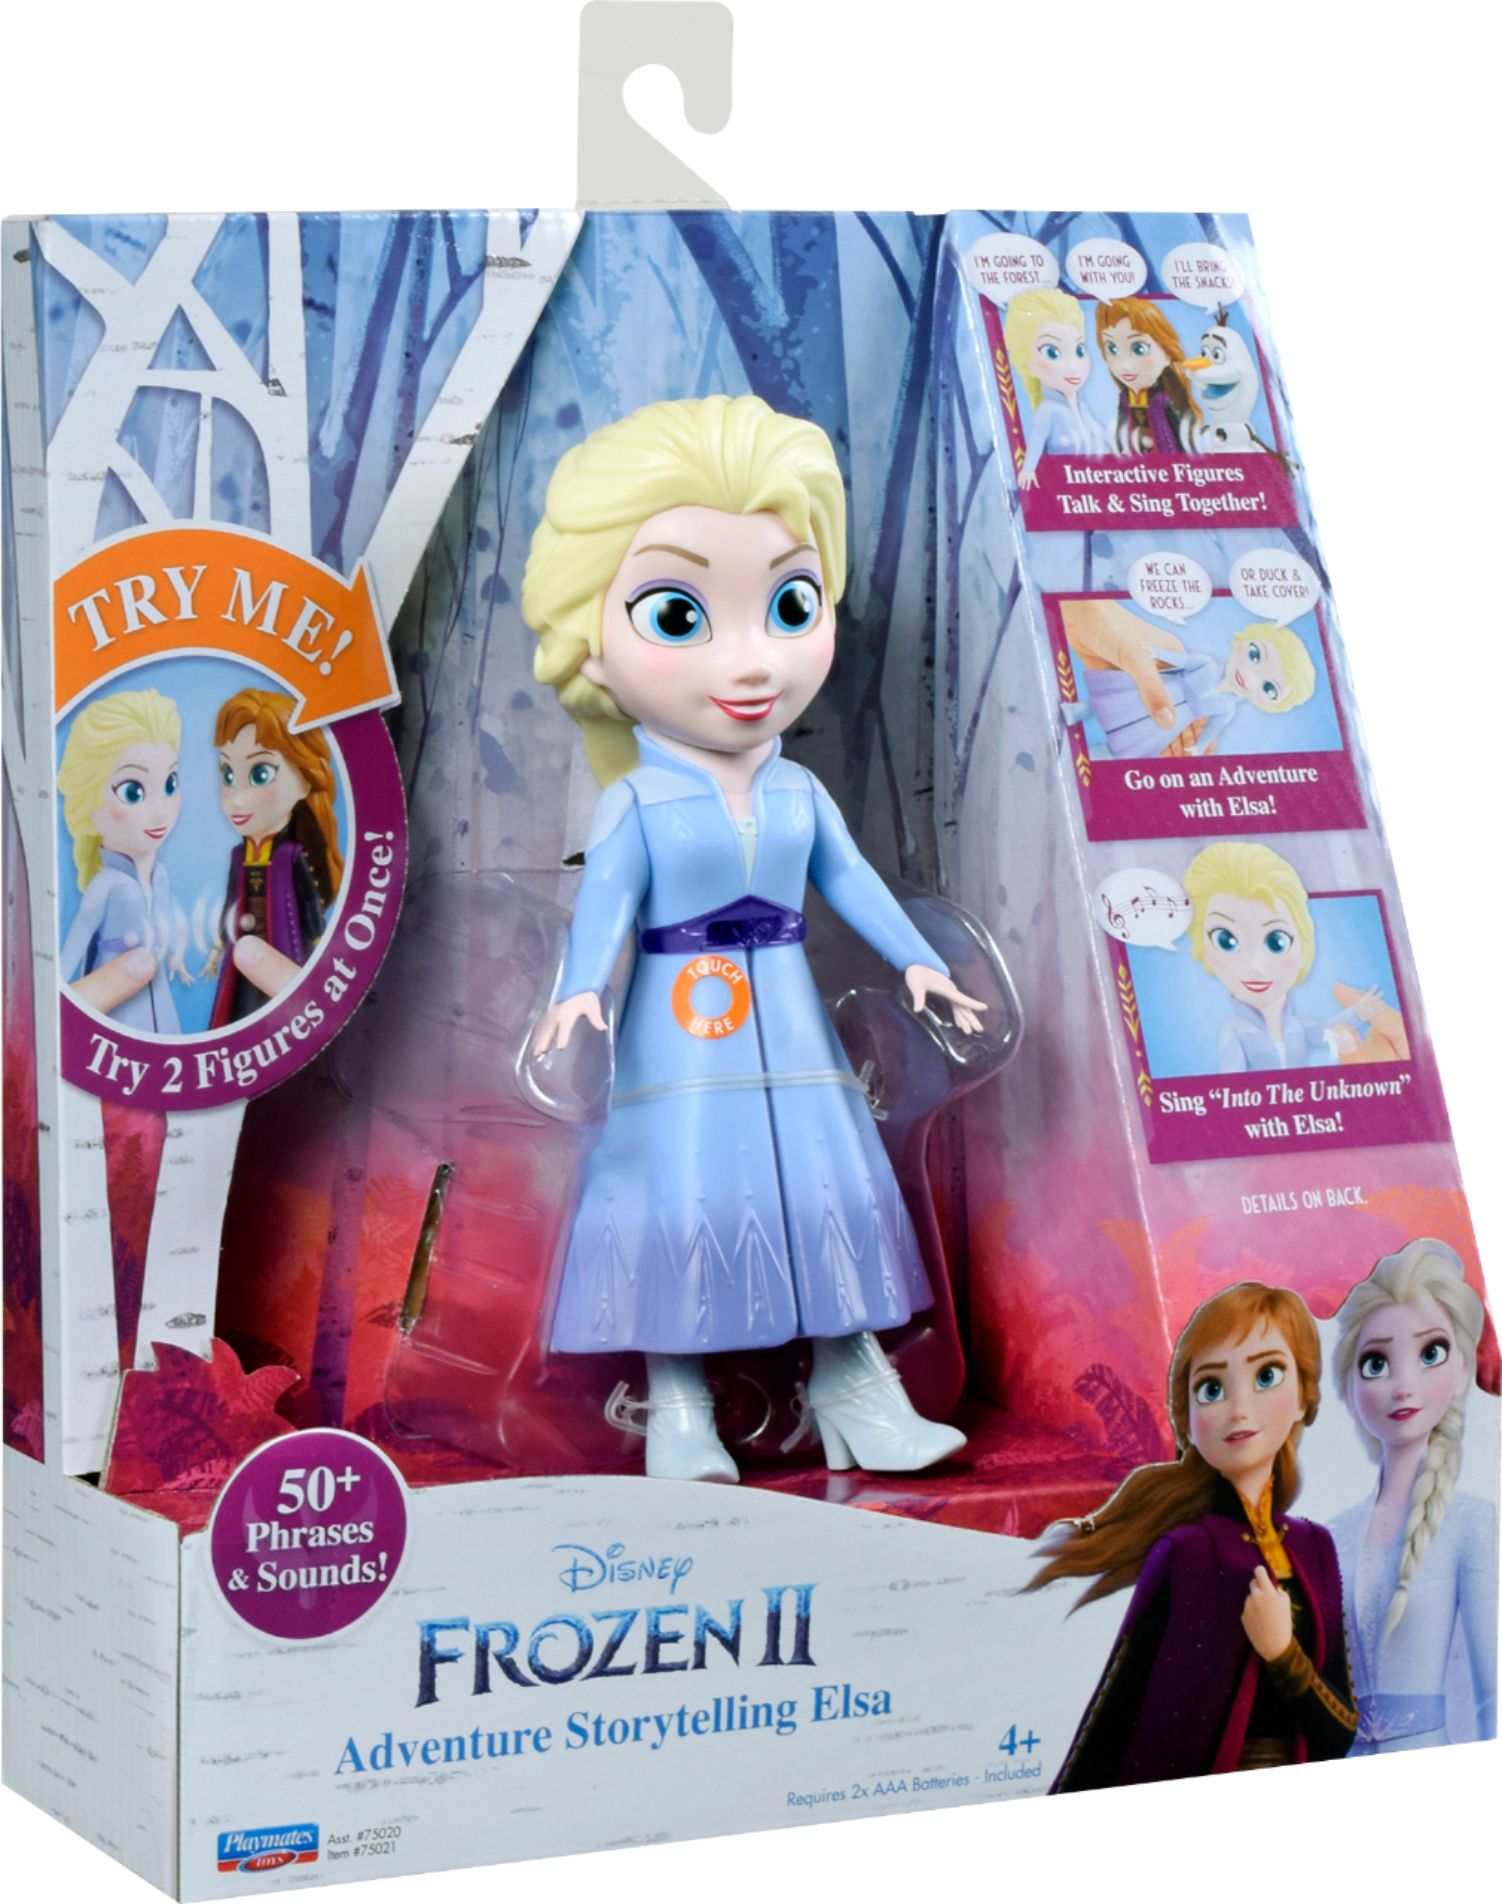 Disney Frozen Adventure Storytelling Interactive Figures (Anna, Elsa, or Olaf) $12 at Best Buy w/ Free Curbside Pickup